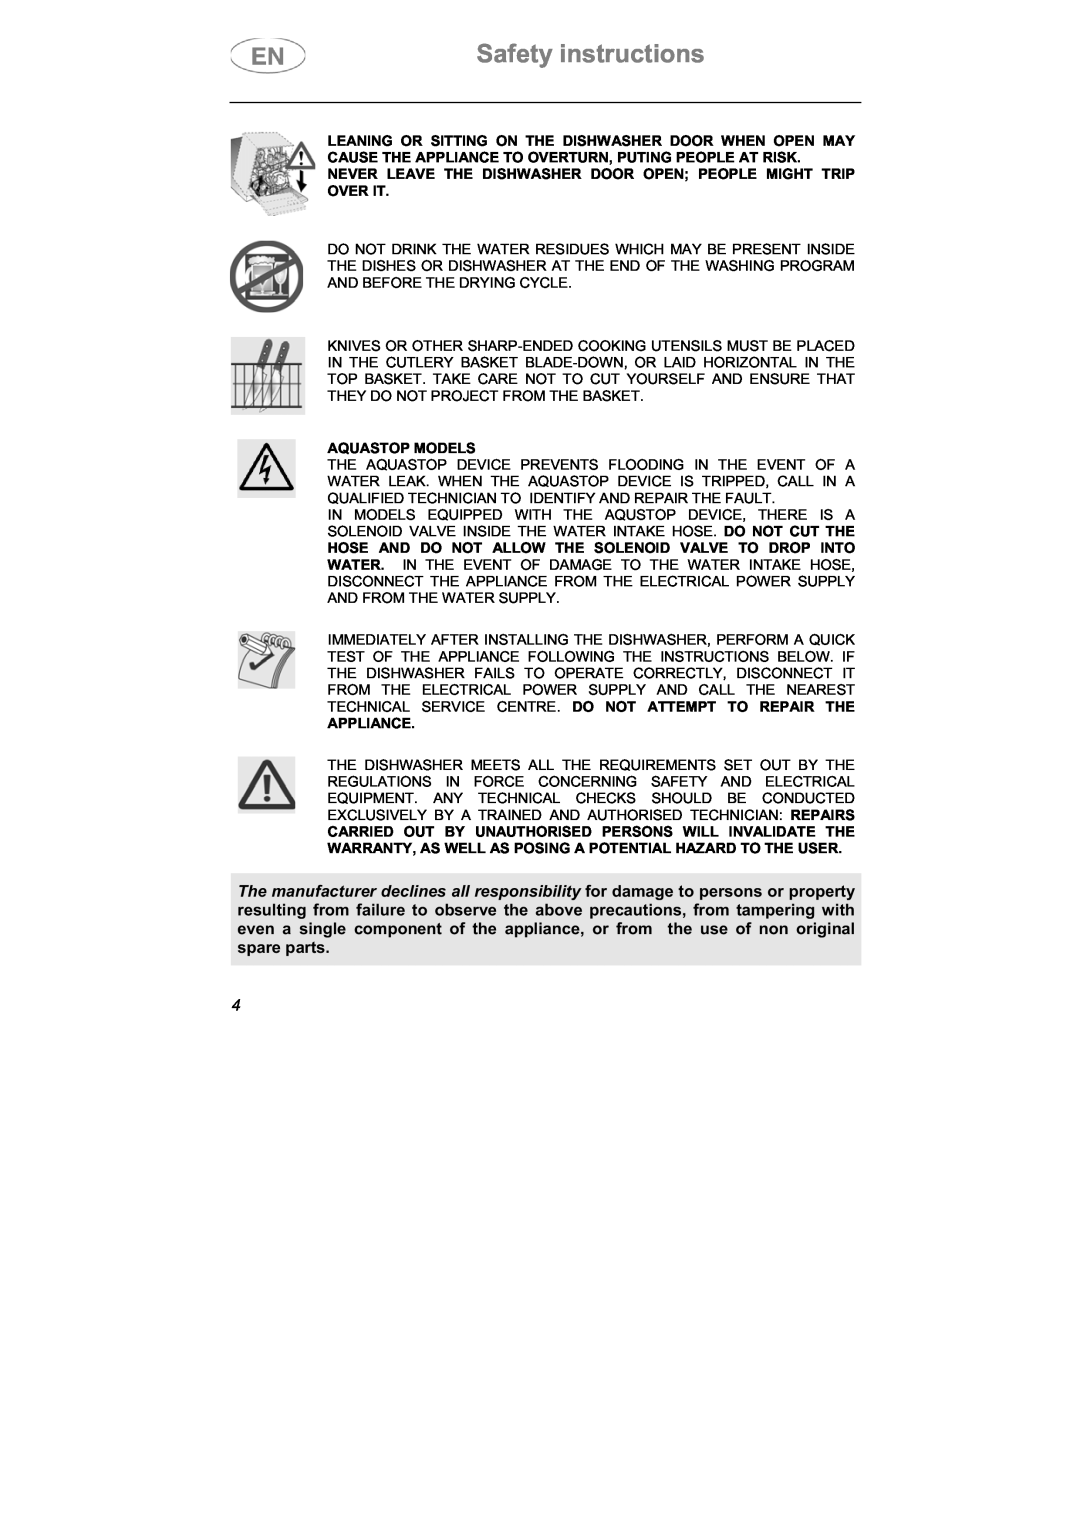 Smeg LSPX1253 manual Safety instructions, Aquastop Models, Appliance 